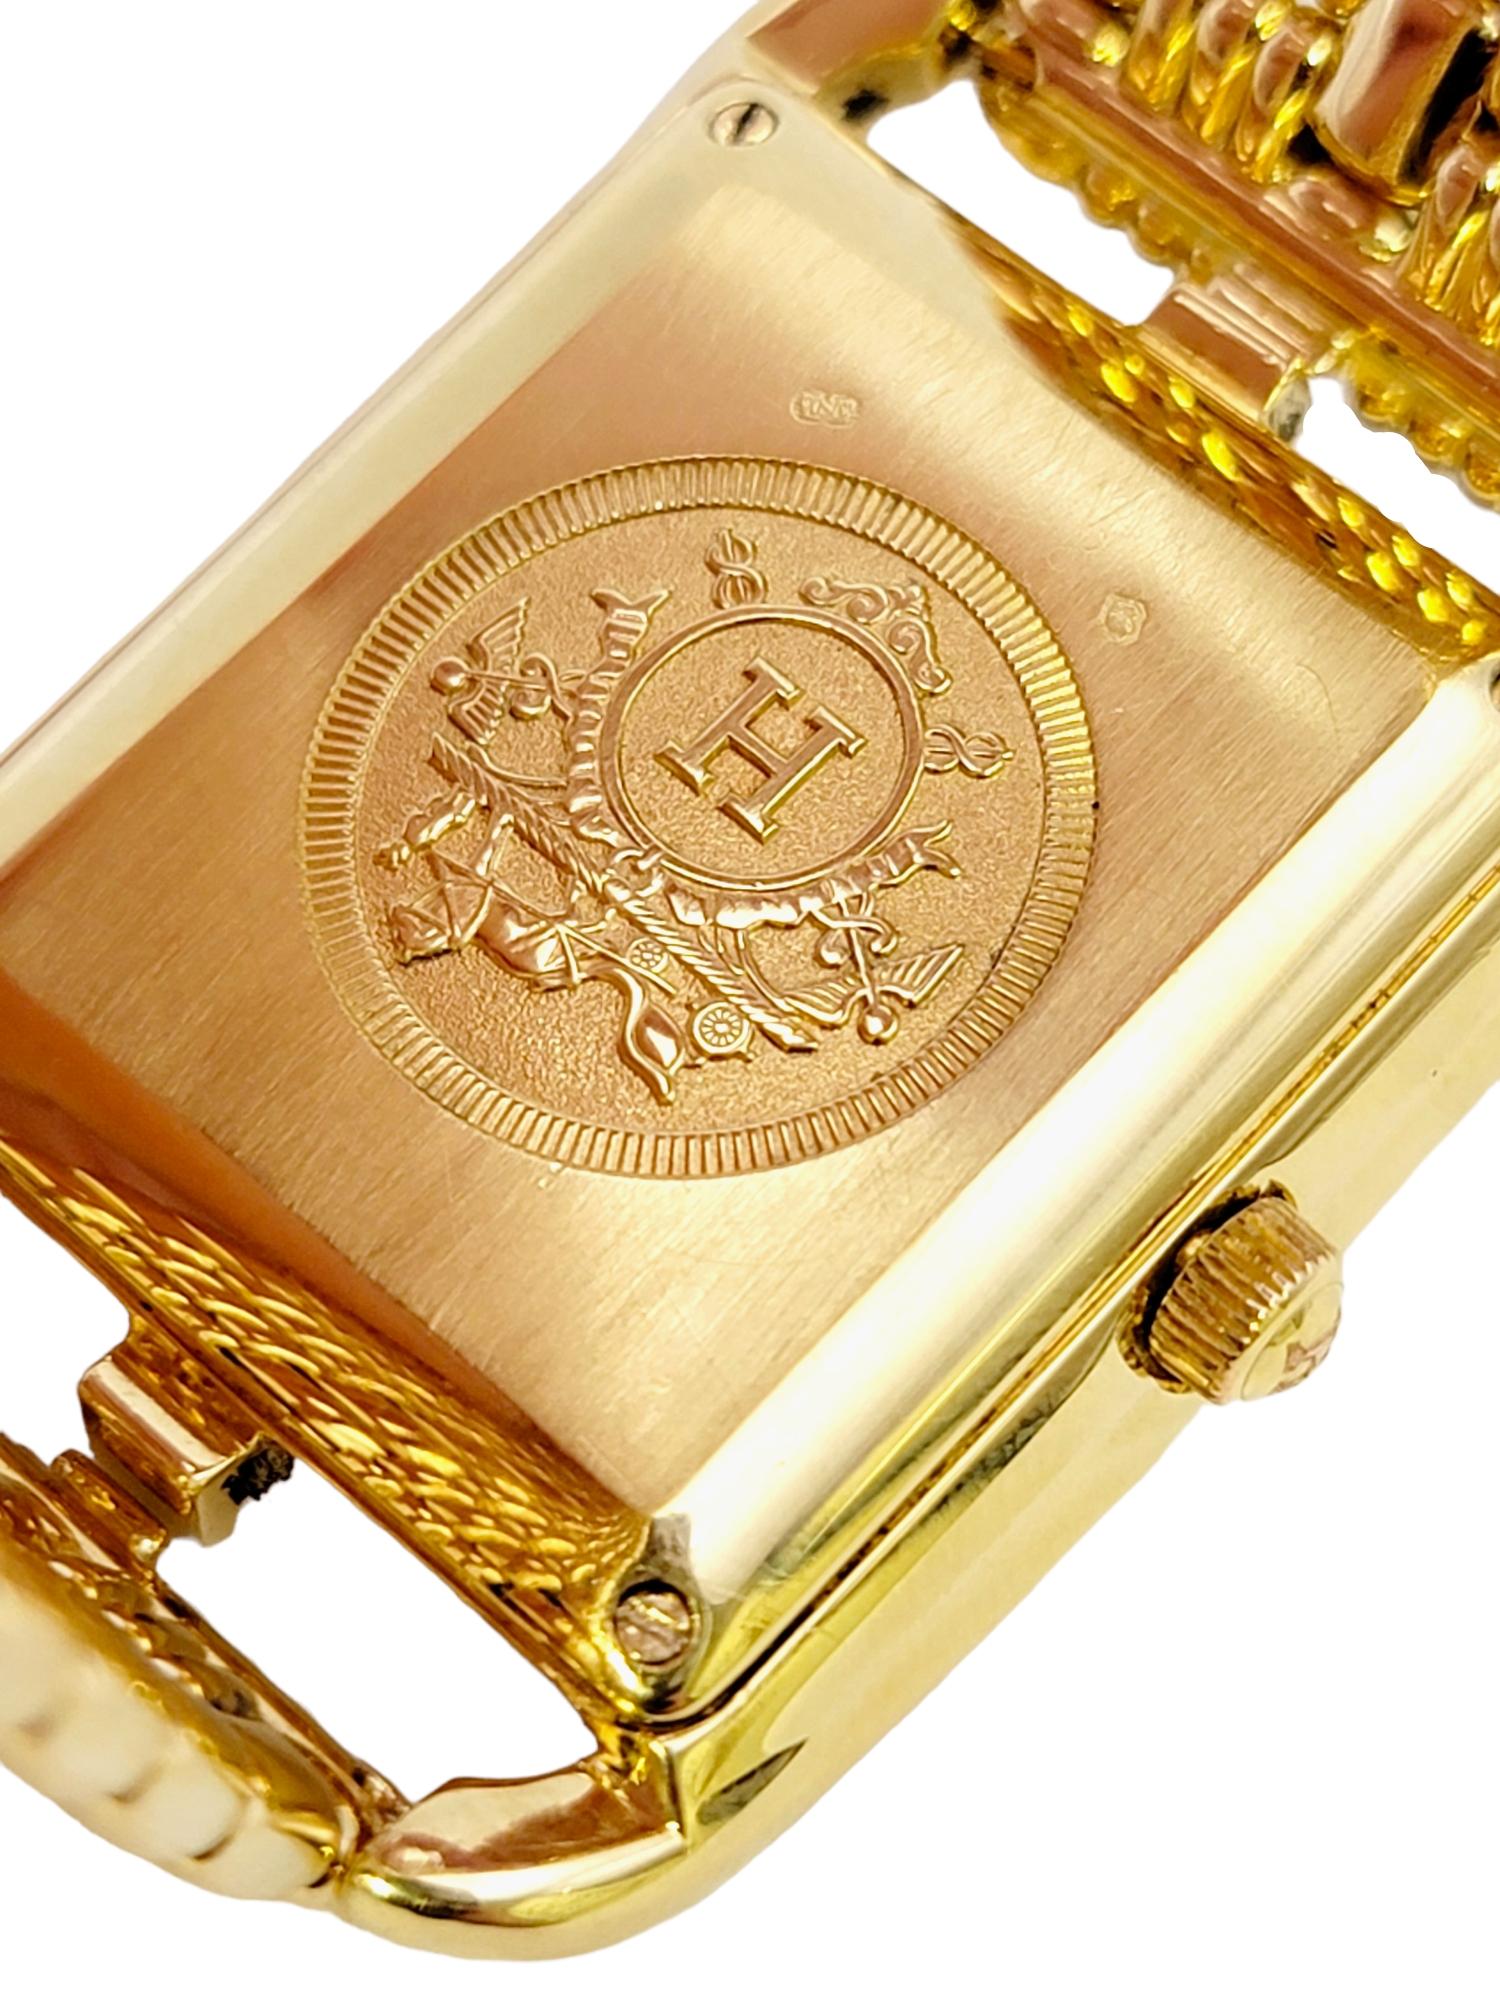 Hermes Cape Cod Automatic Wristwatch 18 Karat Yellow Gold 31 Mm Rectangular Case For Sale 6